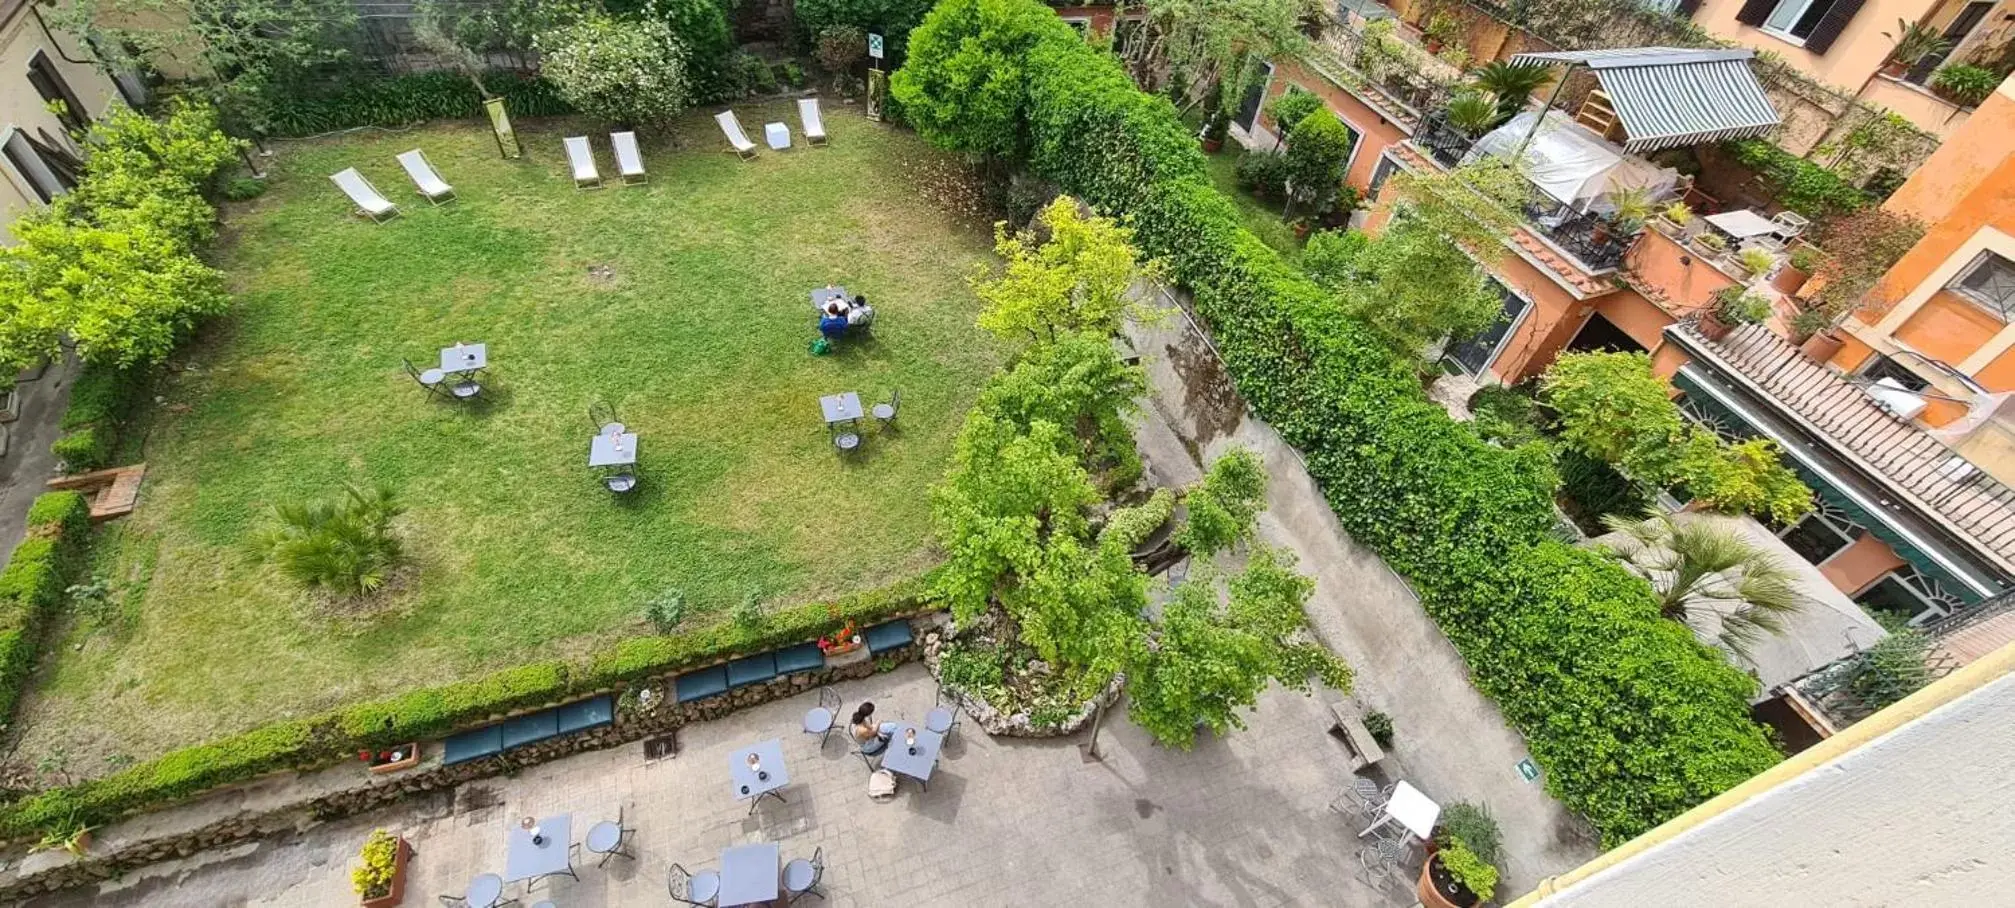 Garden, Bird's-eye View in Villa Riari Garden